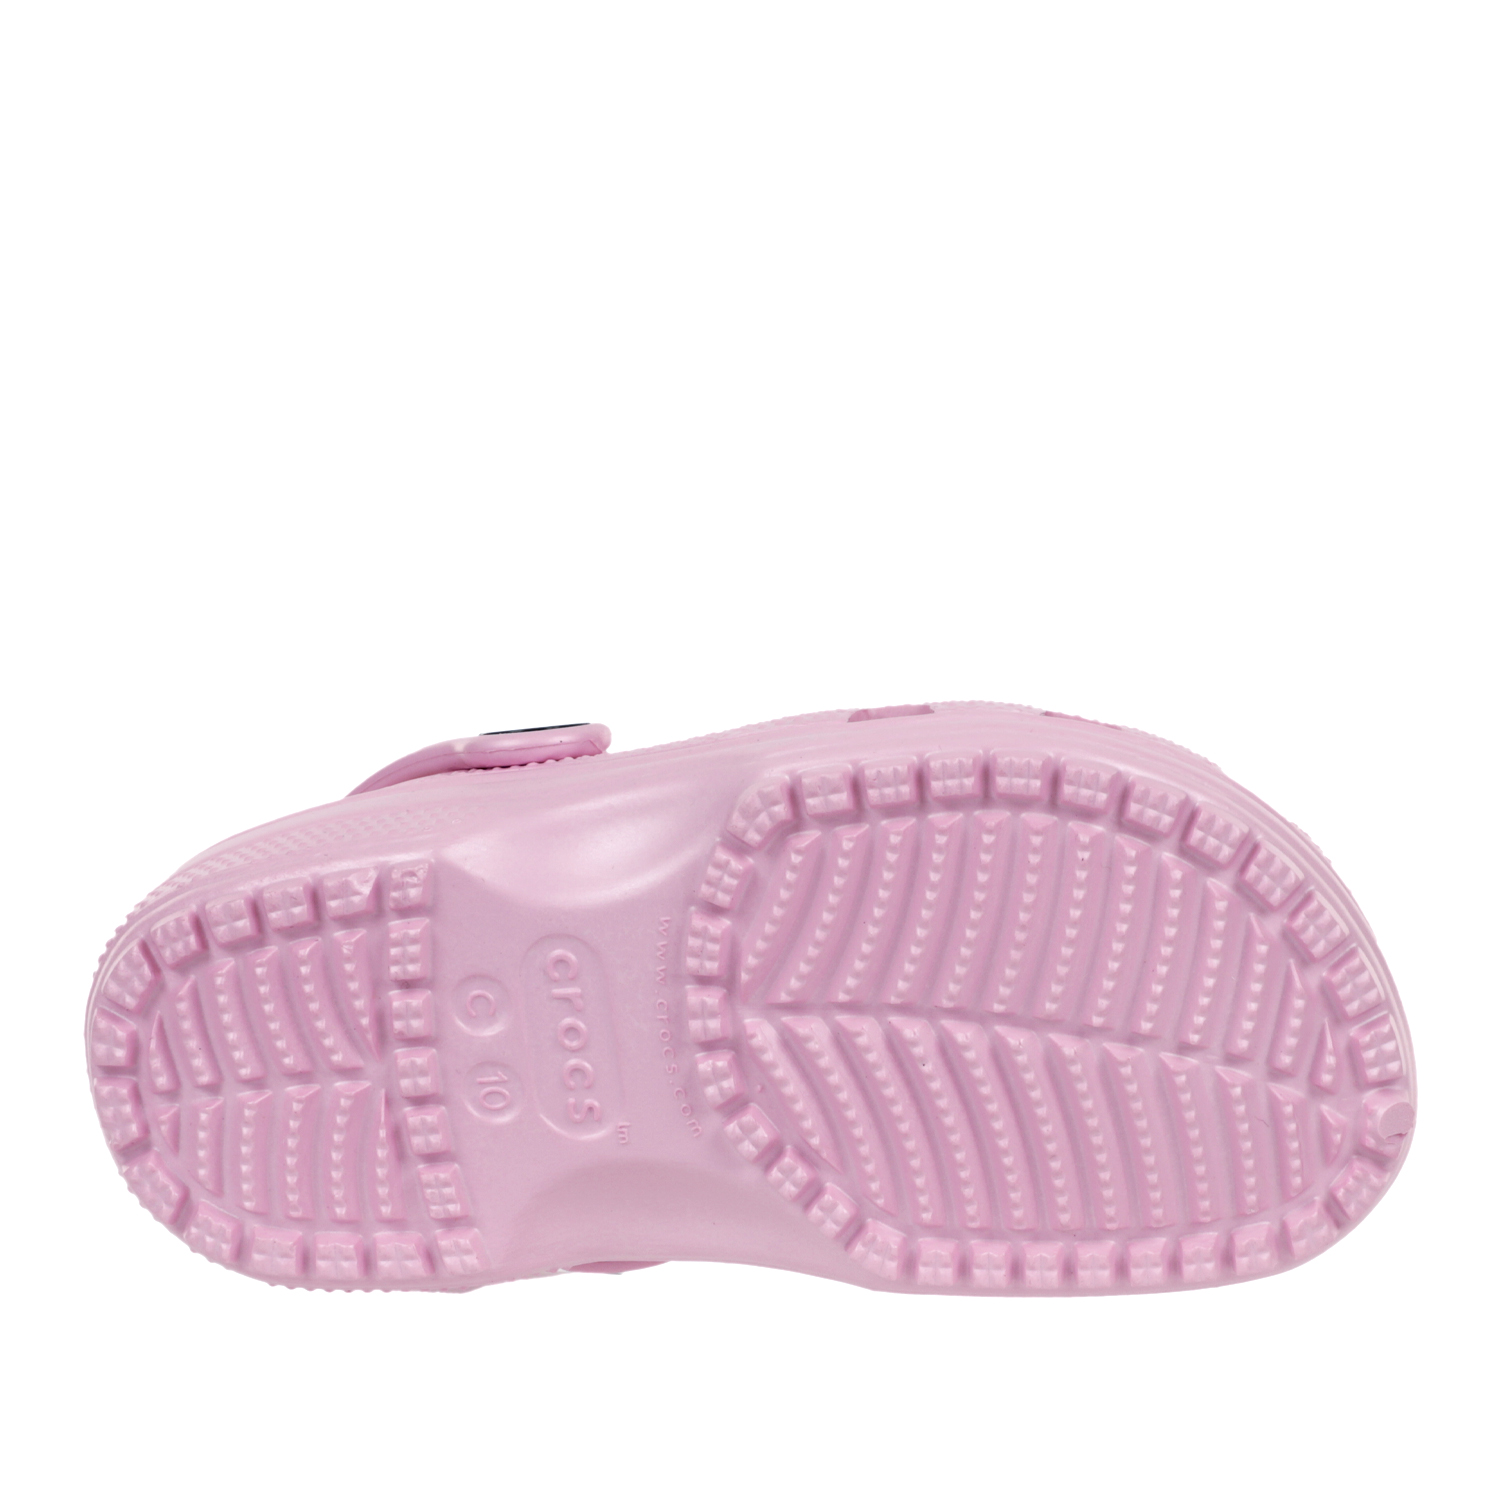 Сандалии детские Crocs Classic Clog T Ballerina Pink